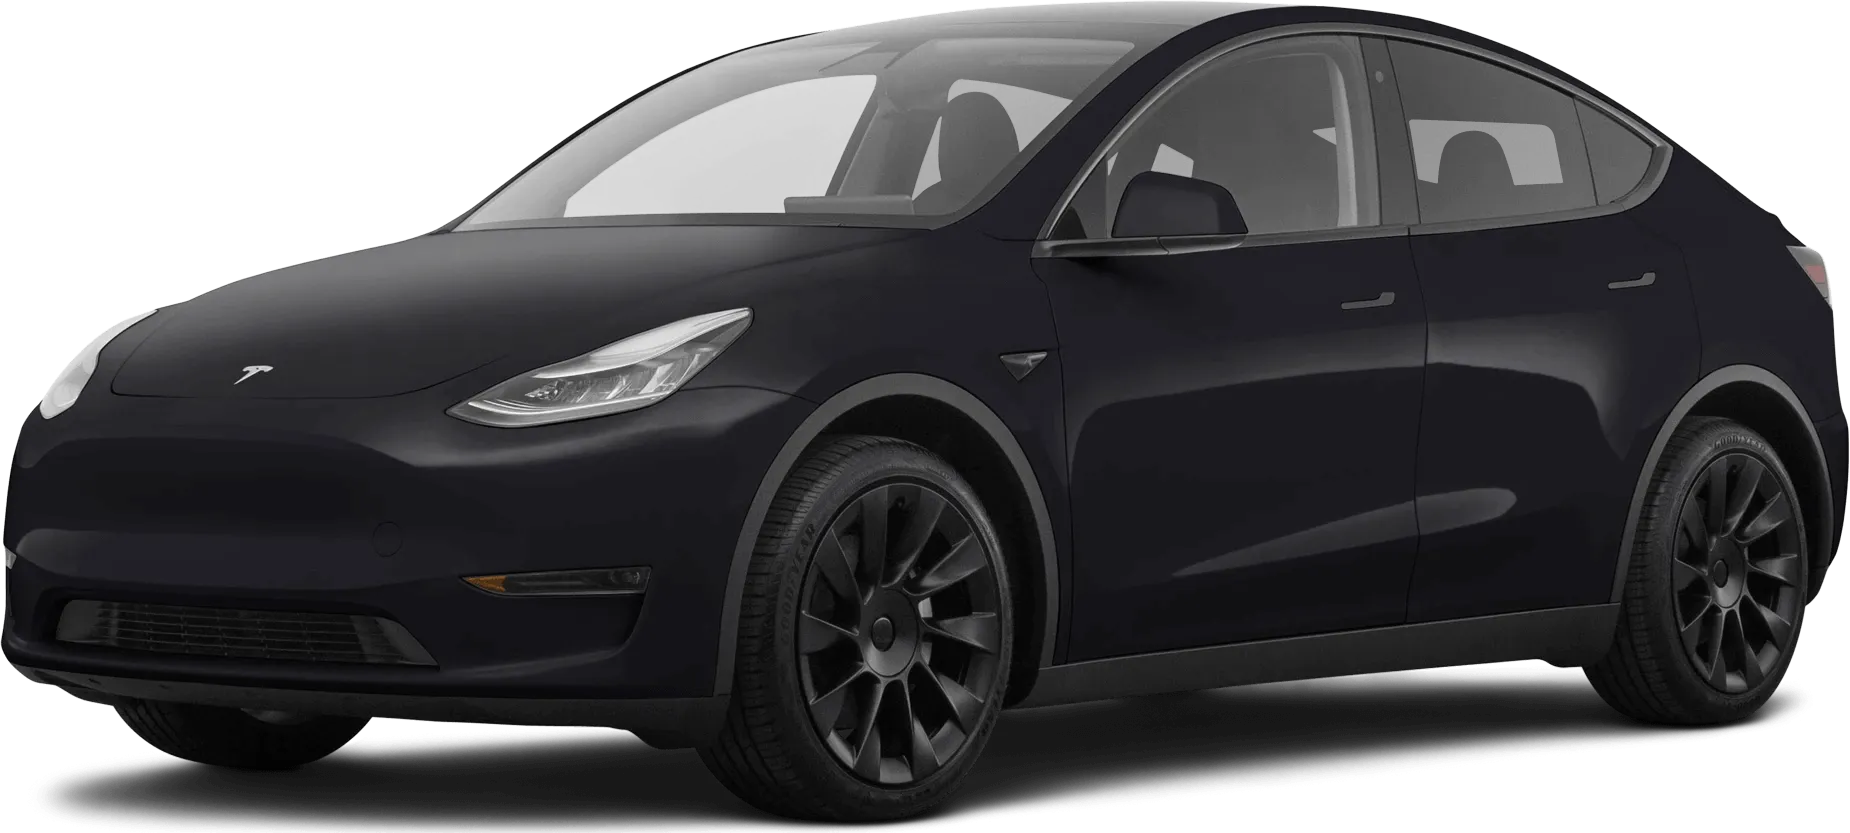 Black Tesla Model Y (4 Passengers limit)